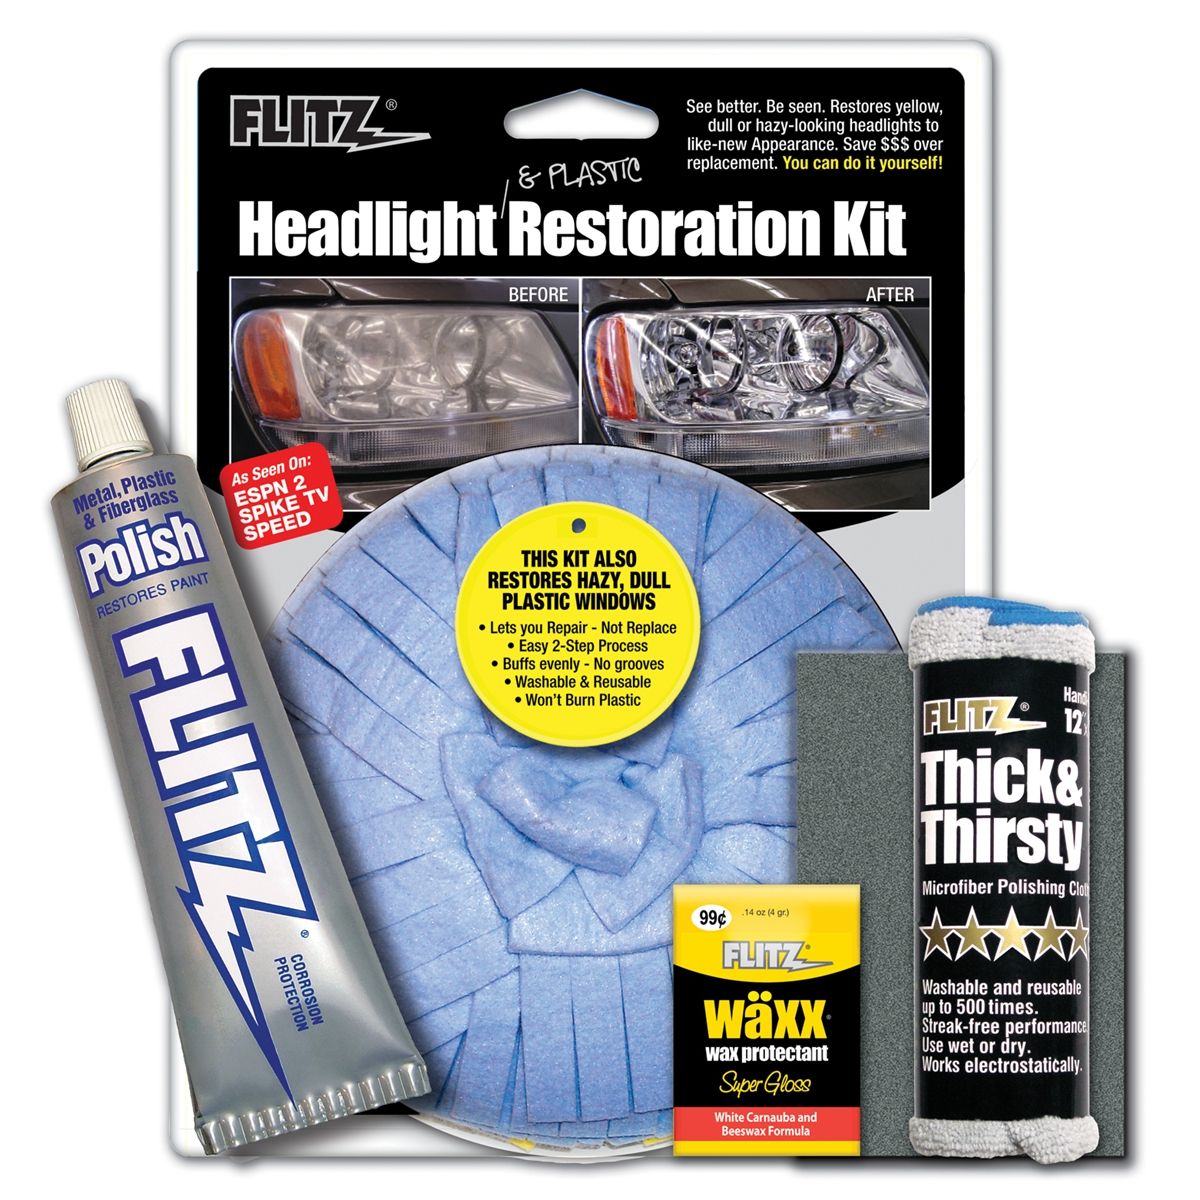 Headlight Restoration and Metal Polishing Kit